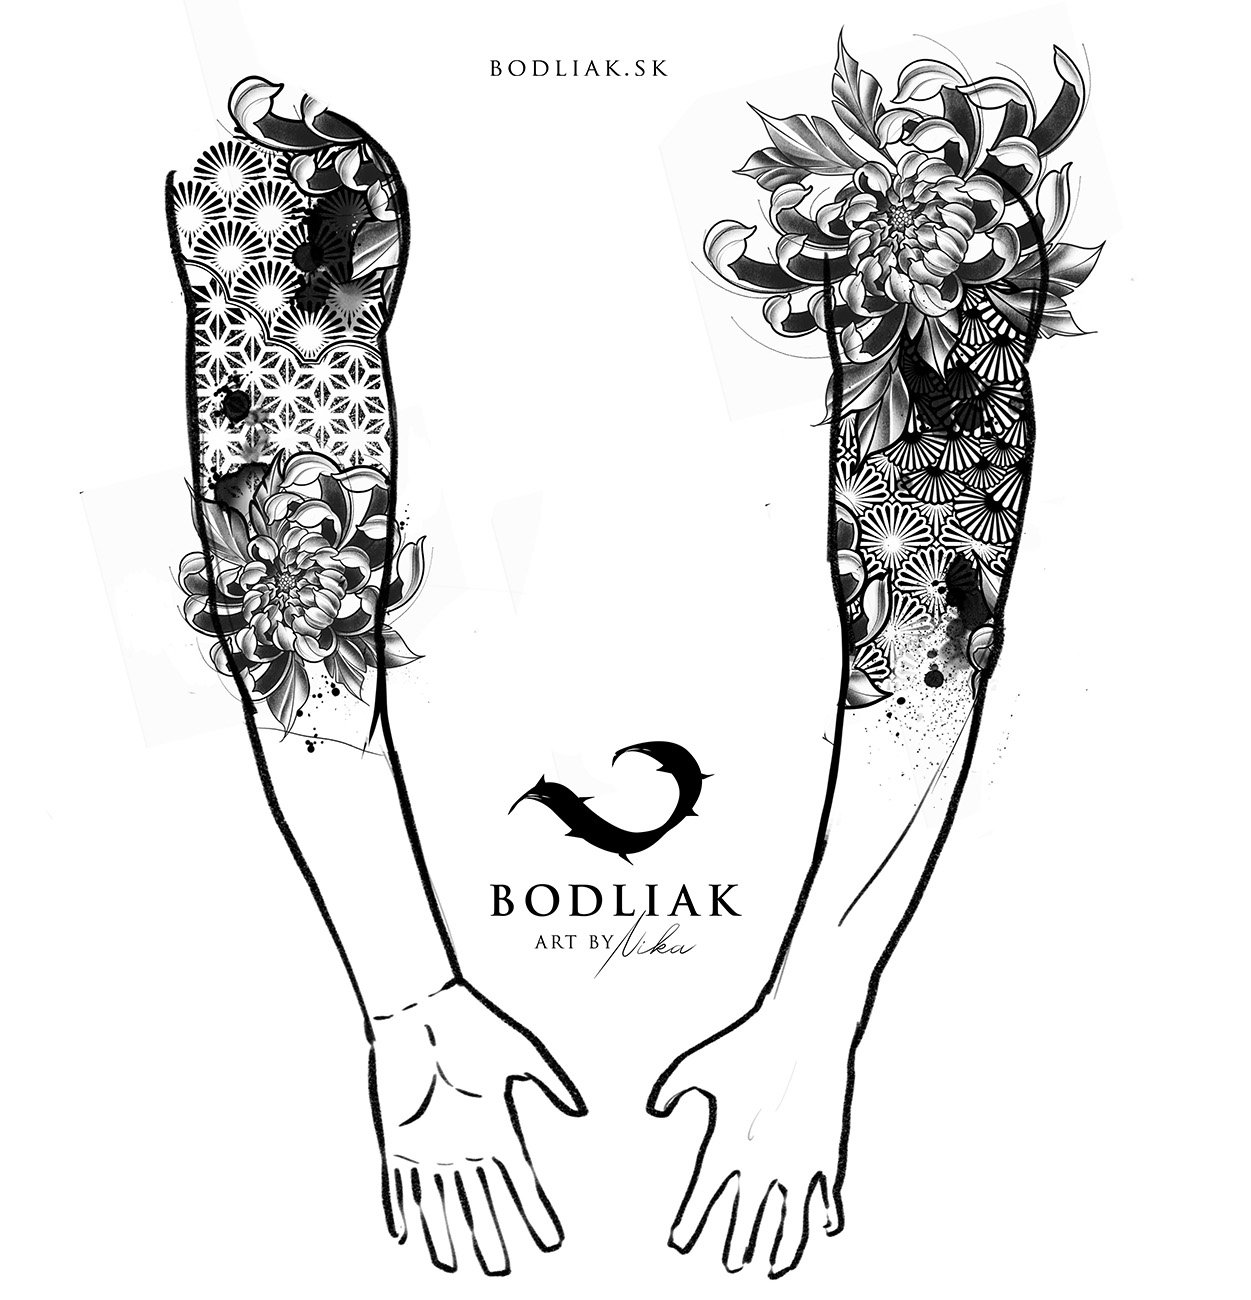  bodliak-bodliaktattoo-motiv-design-freedesign-original-nika-tetovanie-tattoo-black-blacktattoo-flowers-kvety-geometry-geometria-abstract-splechy 